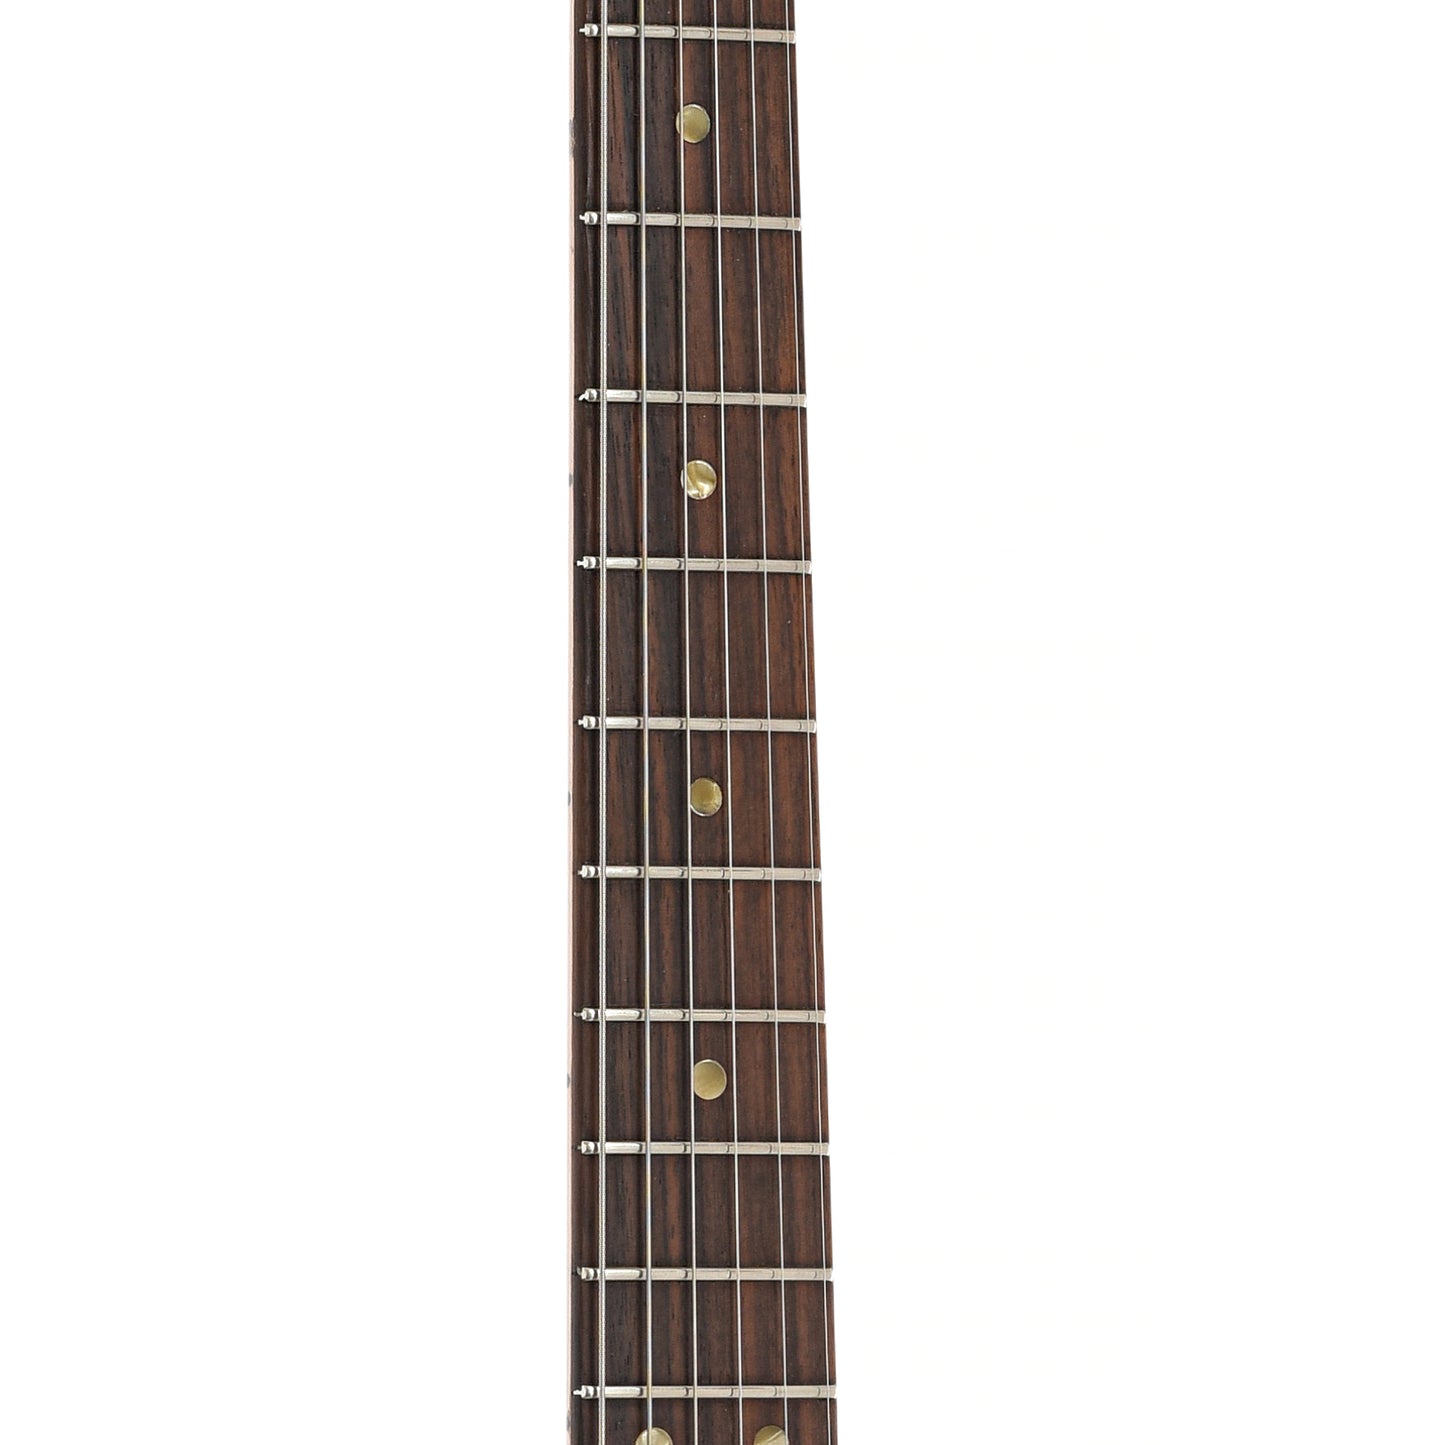 Fretboard of Fender Stratocaster